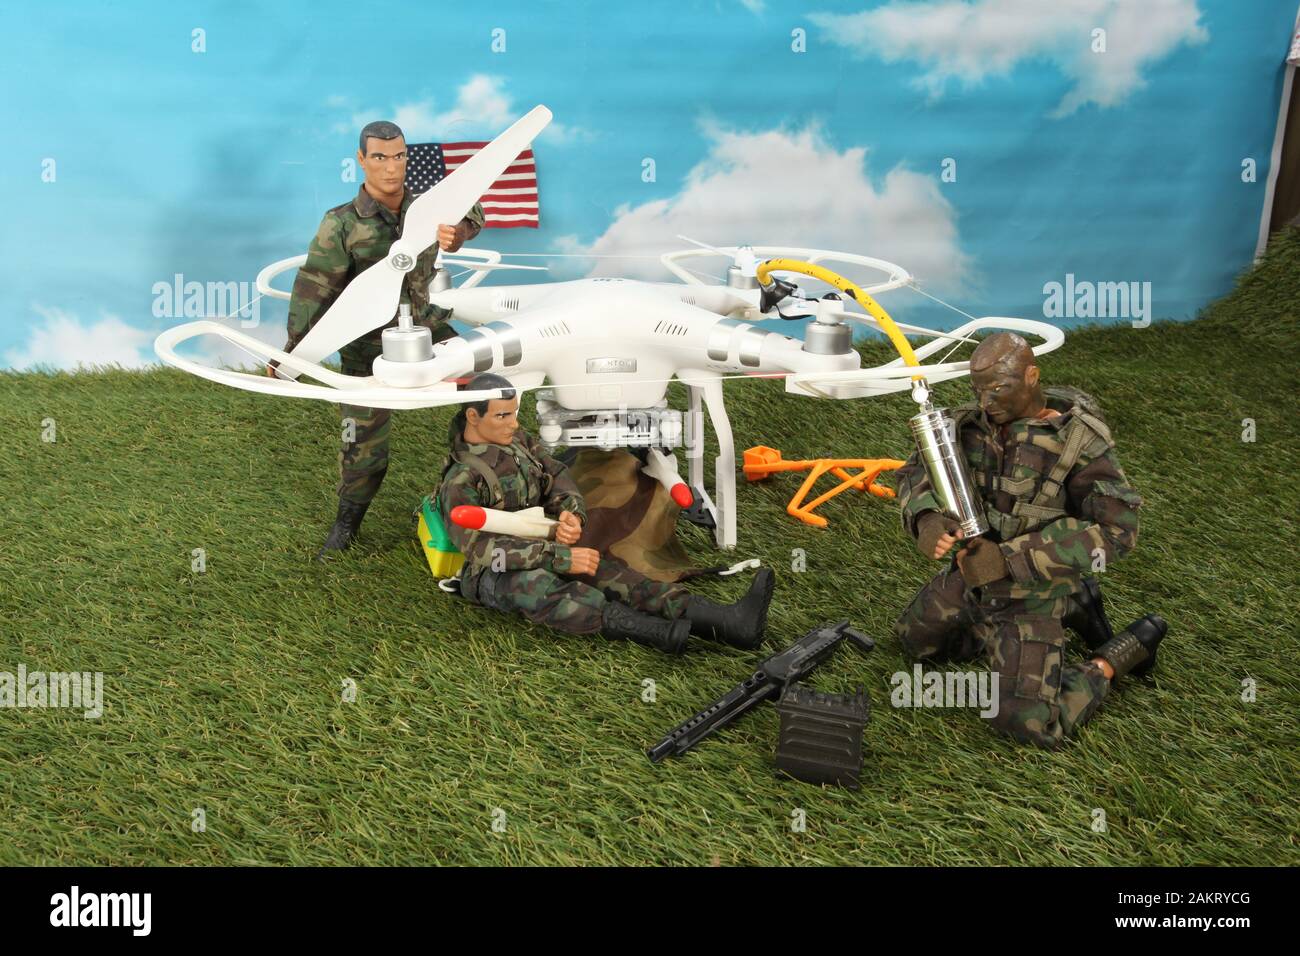 military unmanned aerial vehicle, Iran war diorama Stock Photo